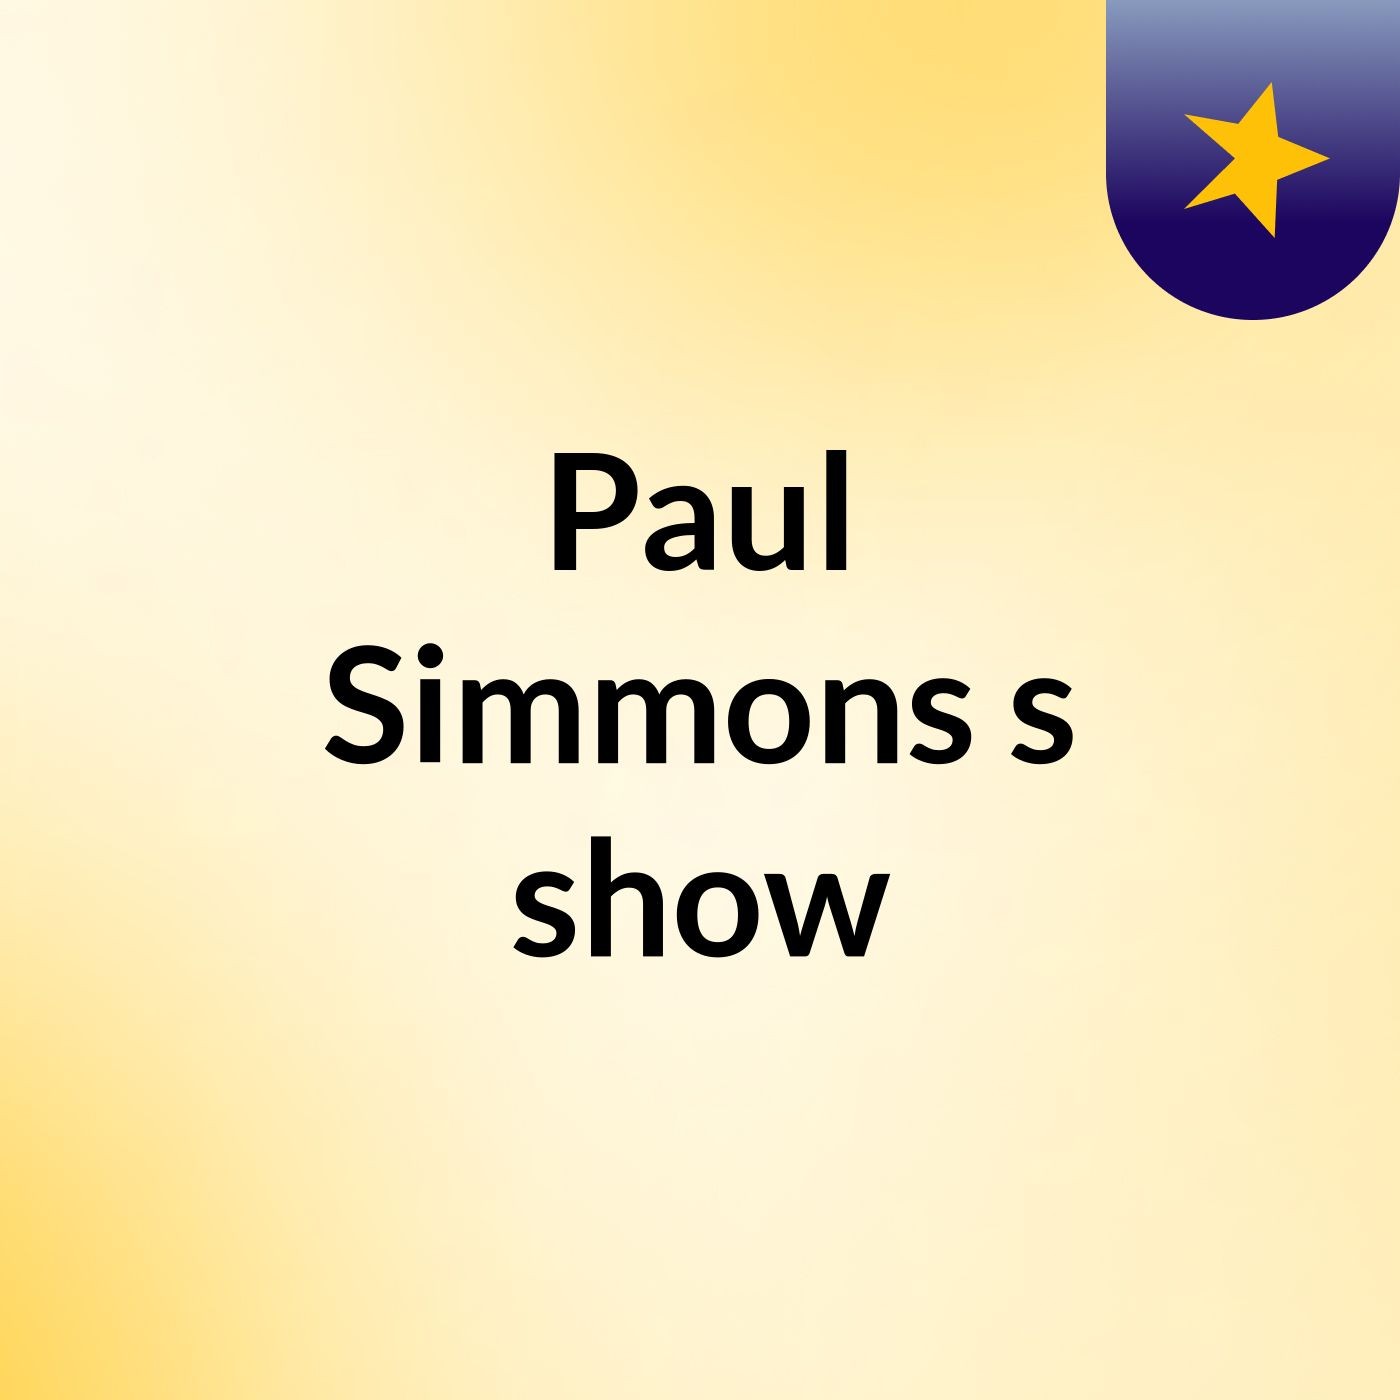 Paul Simmons's show